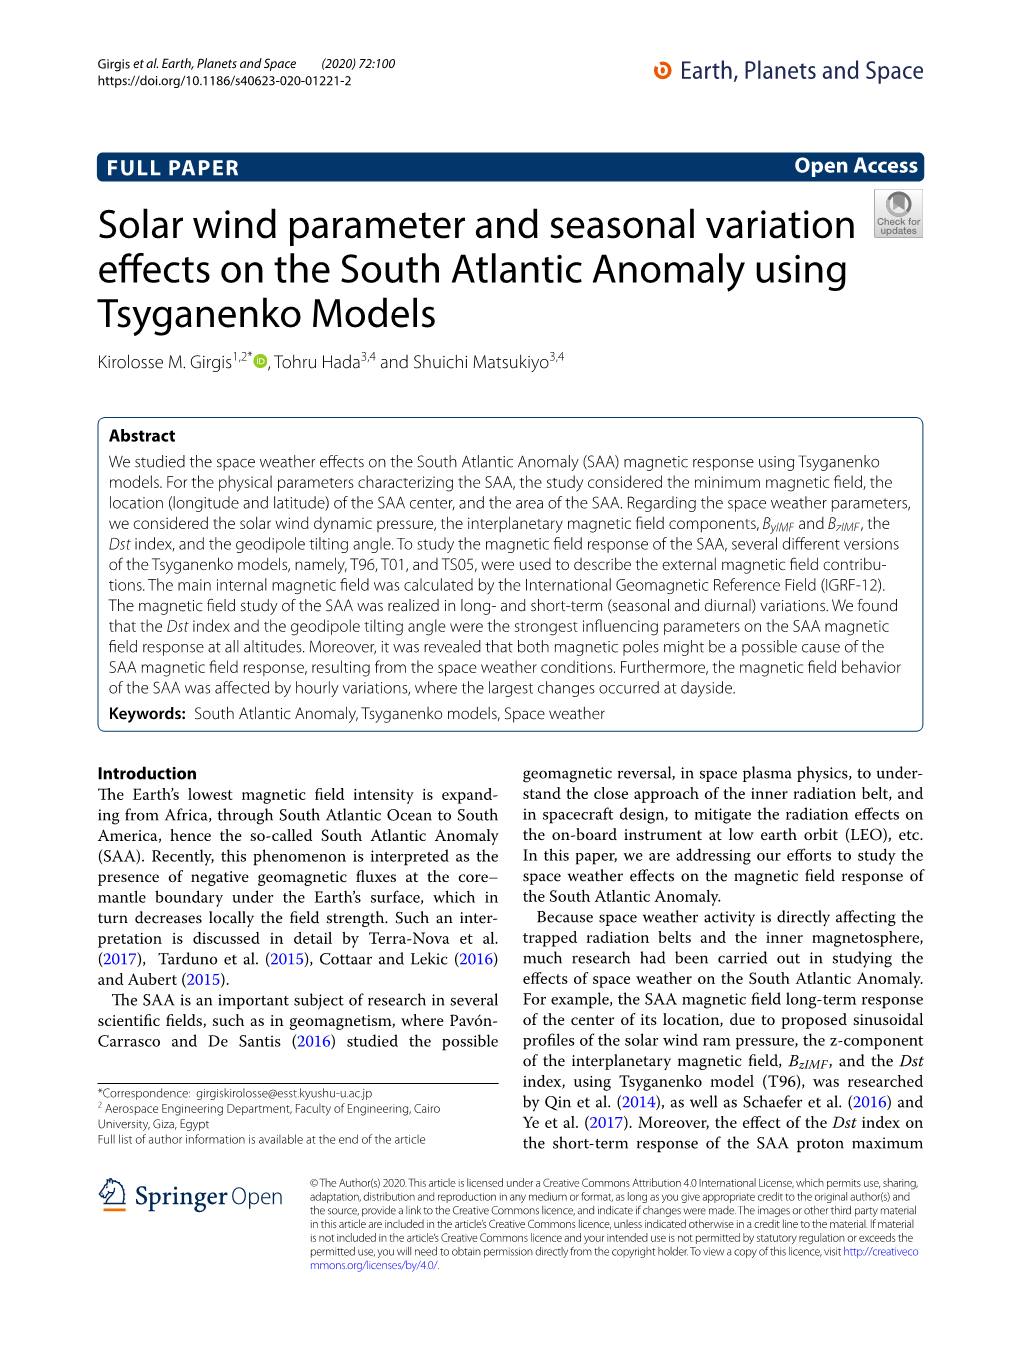 Solar Wind Parameter and Seasonal Variation Efects on the South Atlantic Anomaly Using Tsyganenko Models Kirolosse M